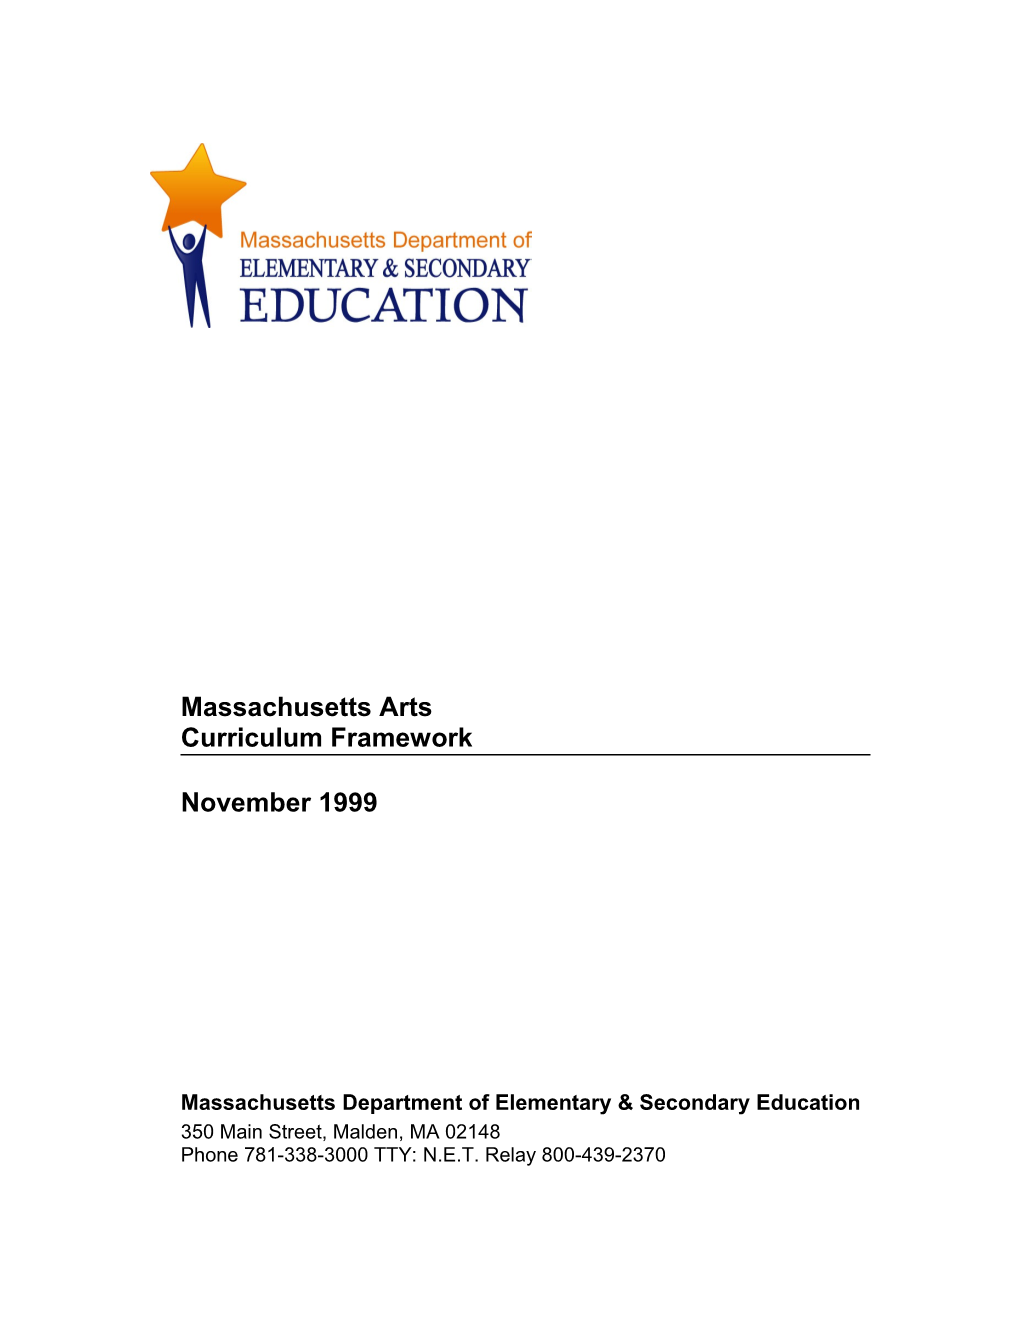 Massachusetts Arts Curriculum Framework - November 1999